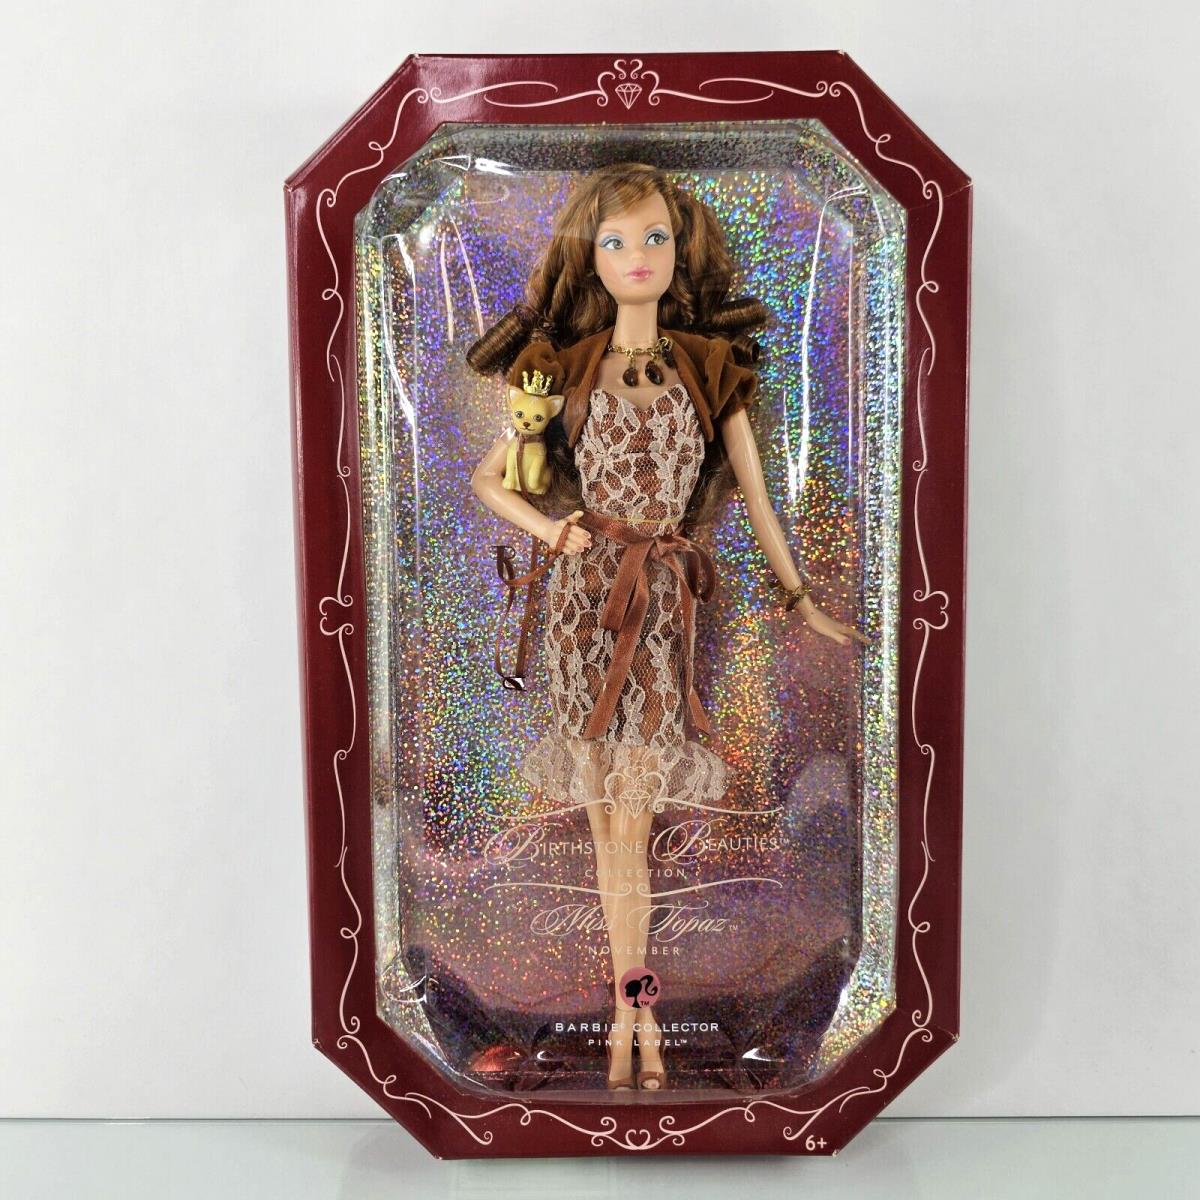 Barbie Birthstone Beauties Miss Topaz November Doll Set K8700 Mattel 2007